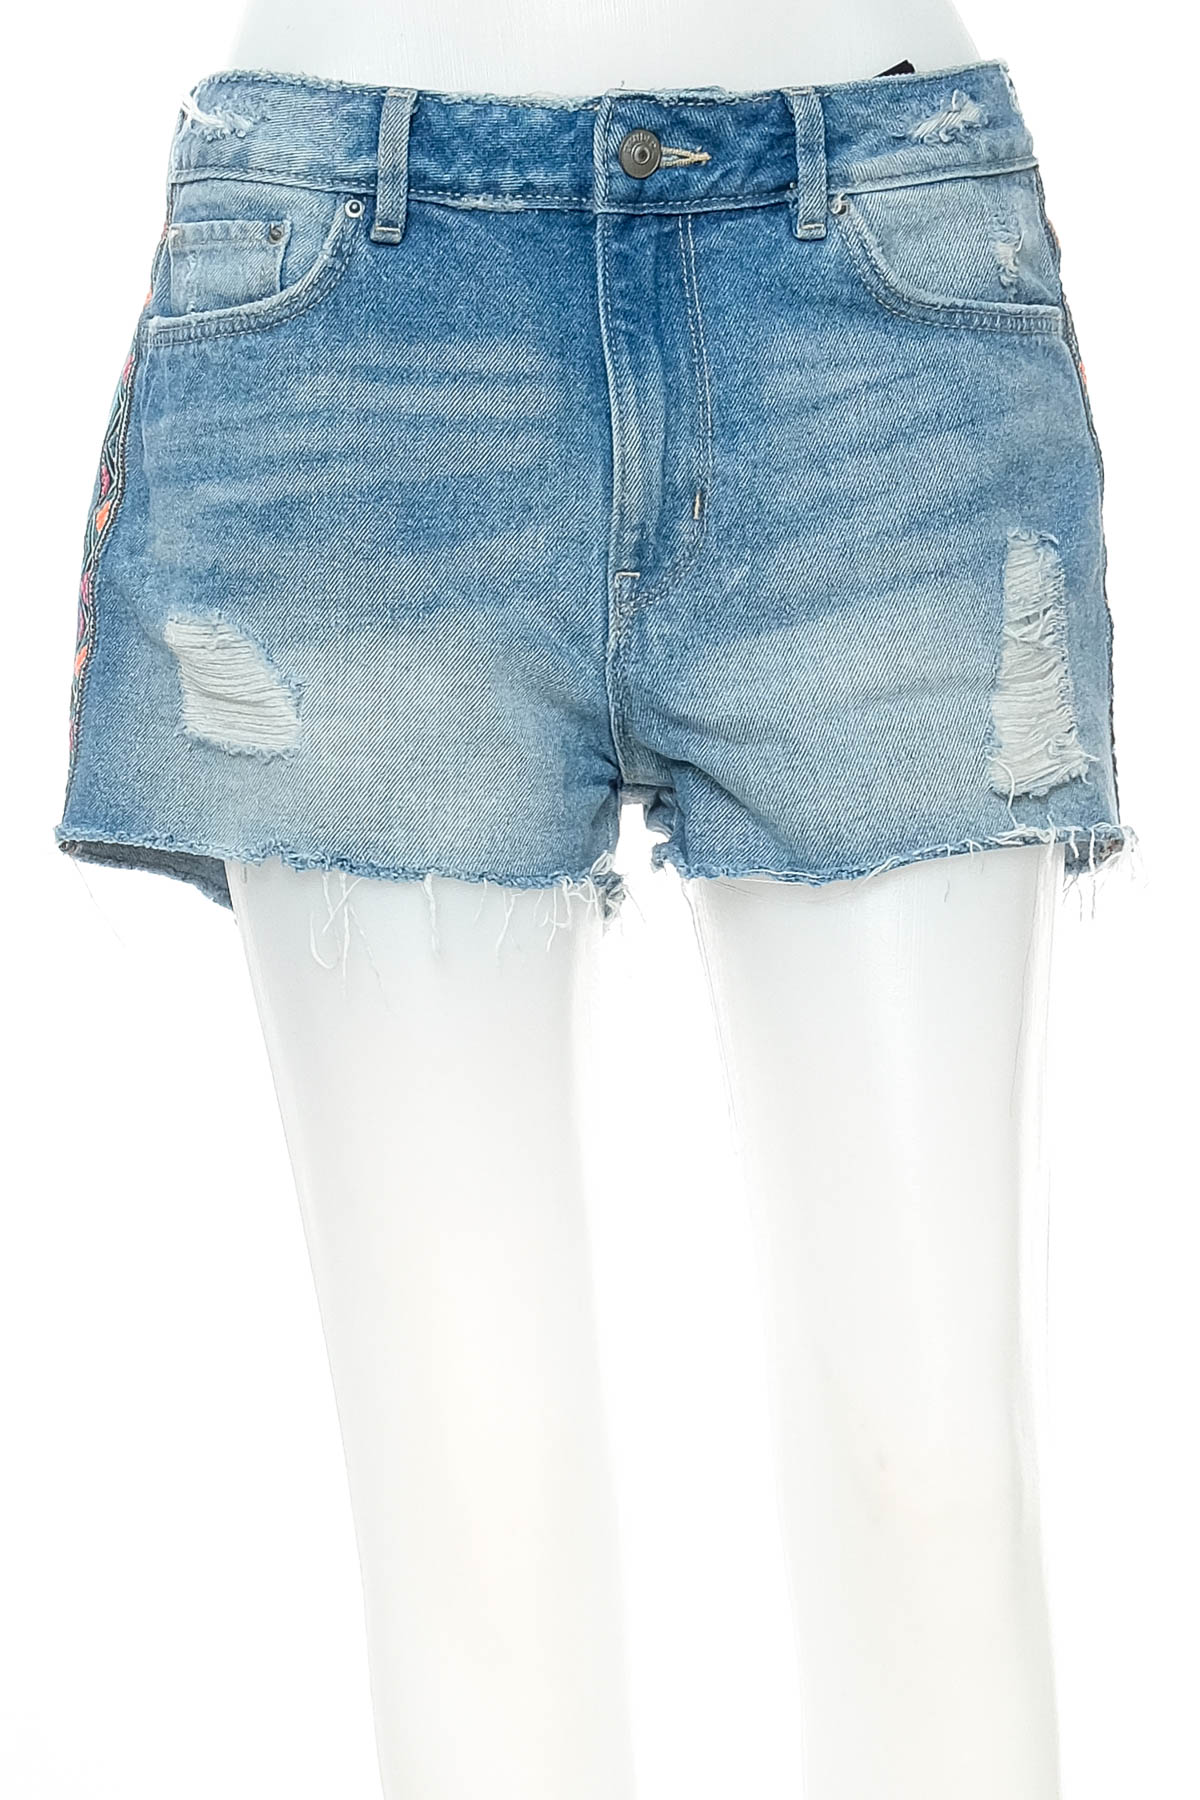 Female shorts - H&M COACHELLA - 0